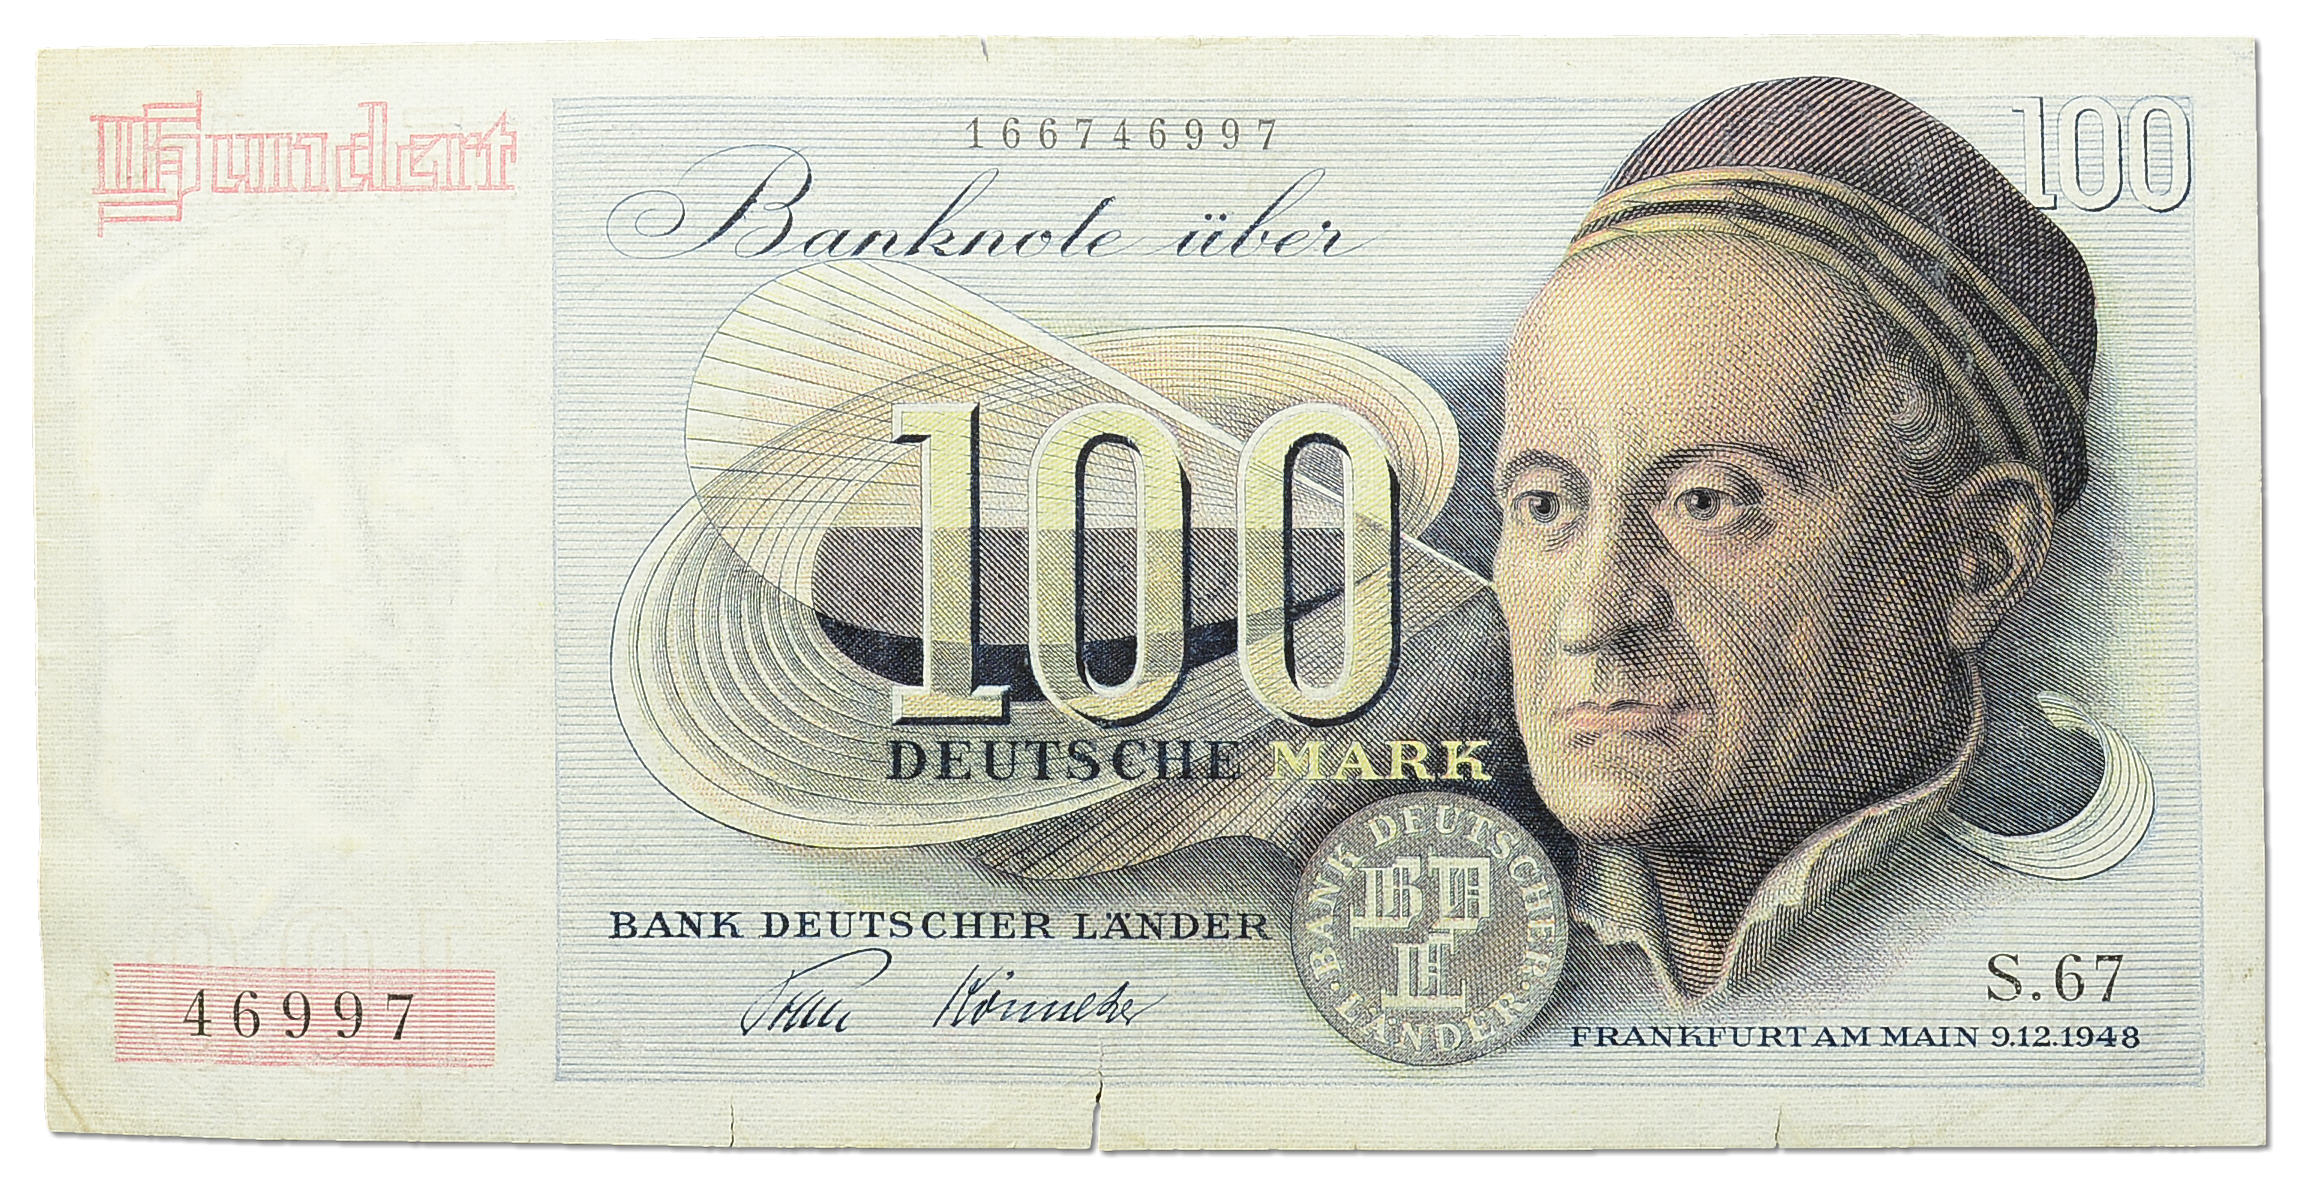 Купюра марка. Купюра 100 Дойч марок. Дойч марки ФРГ. Марка ФРГ 1948. Немецкая марка (Deutsche Mark).